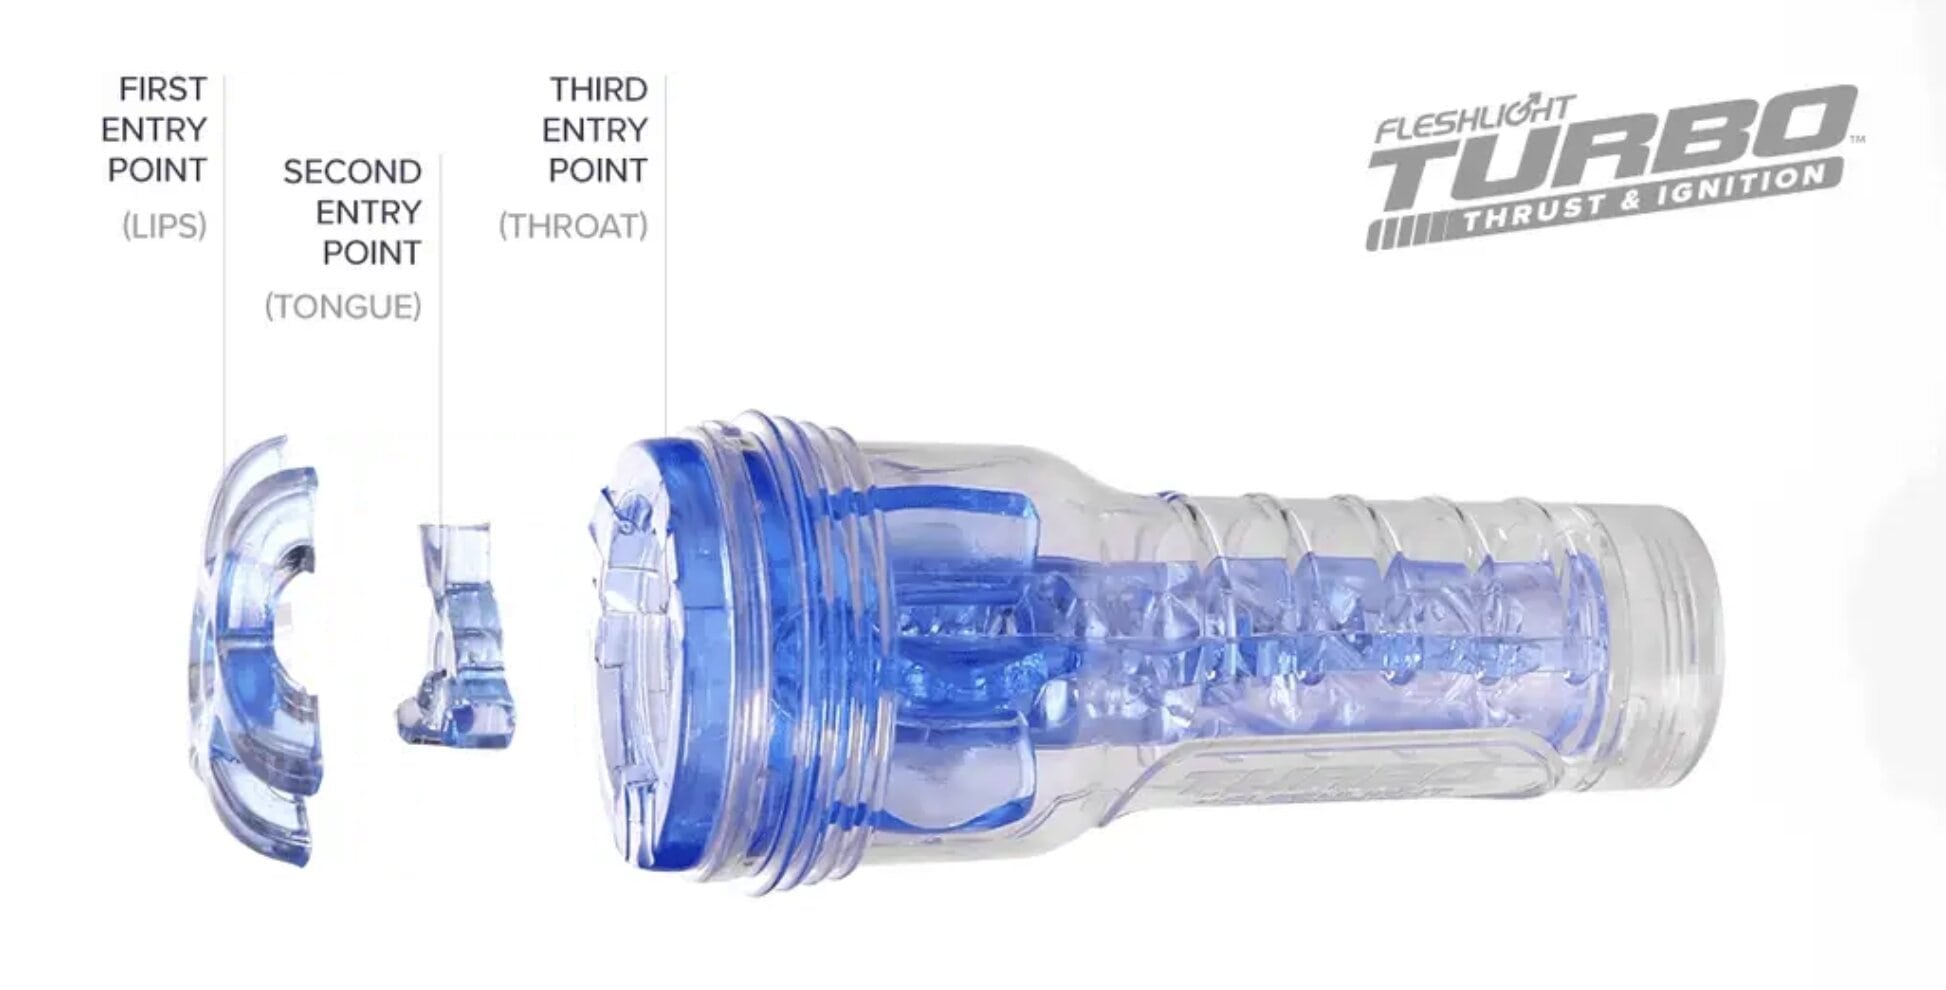 Fleshlight Turbo Thrust Special feature